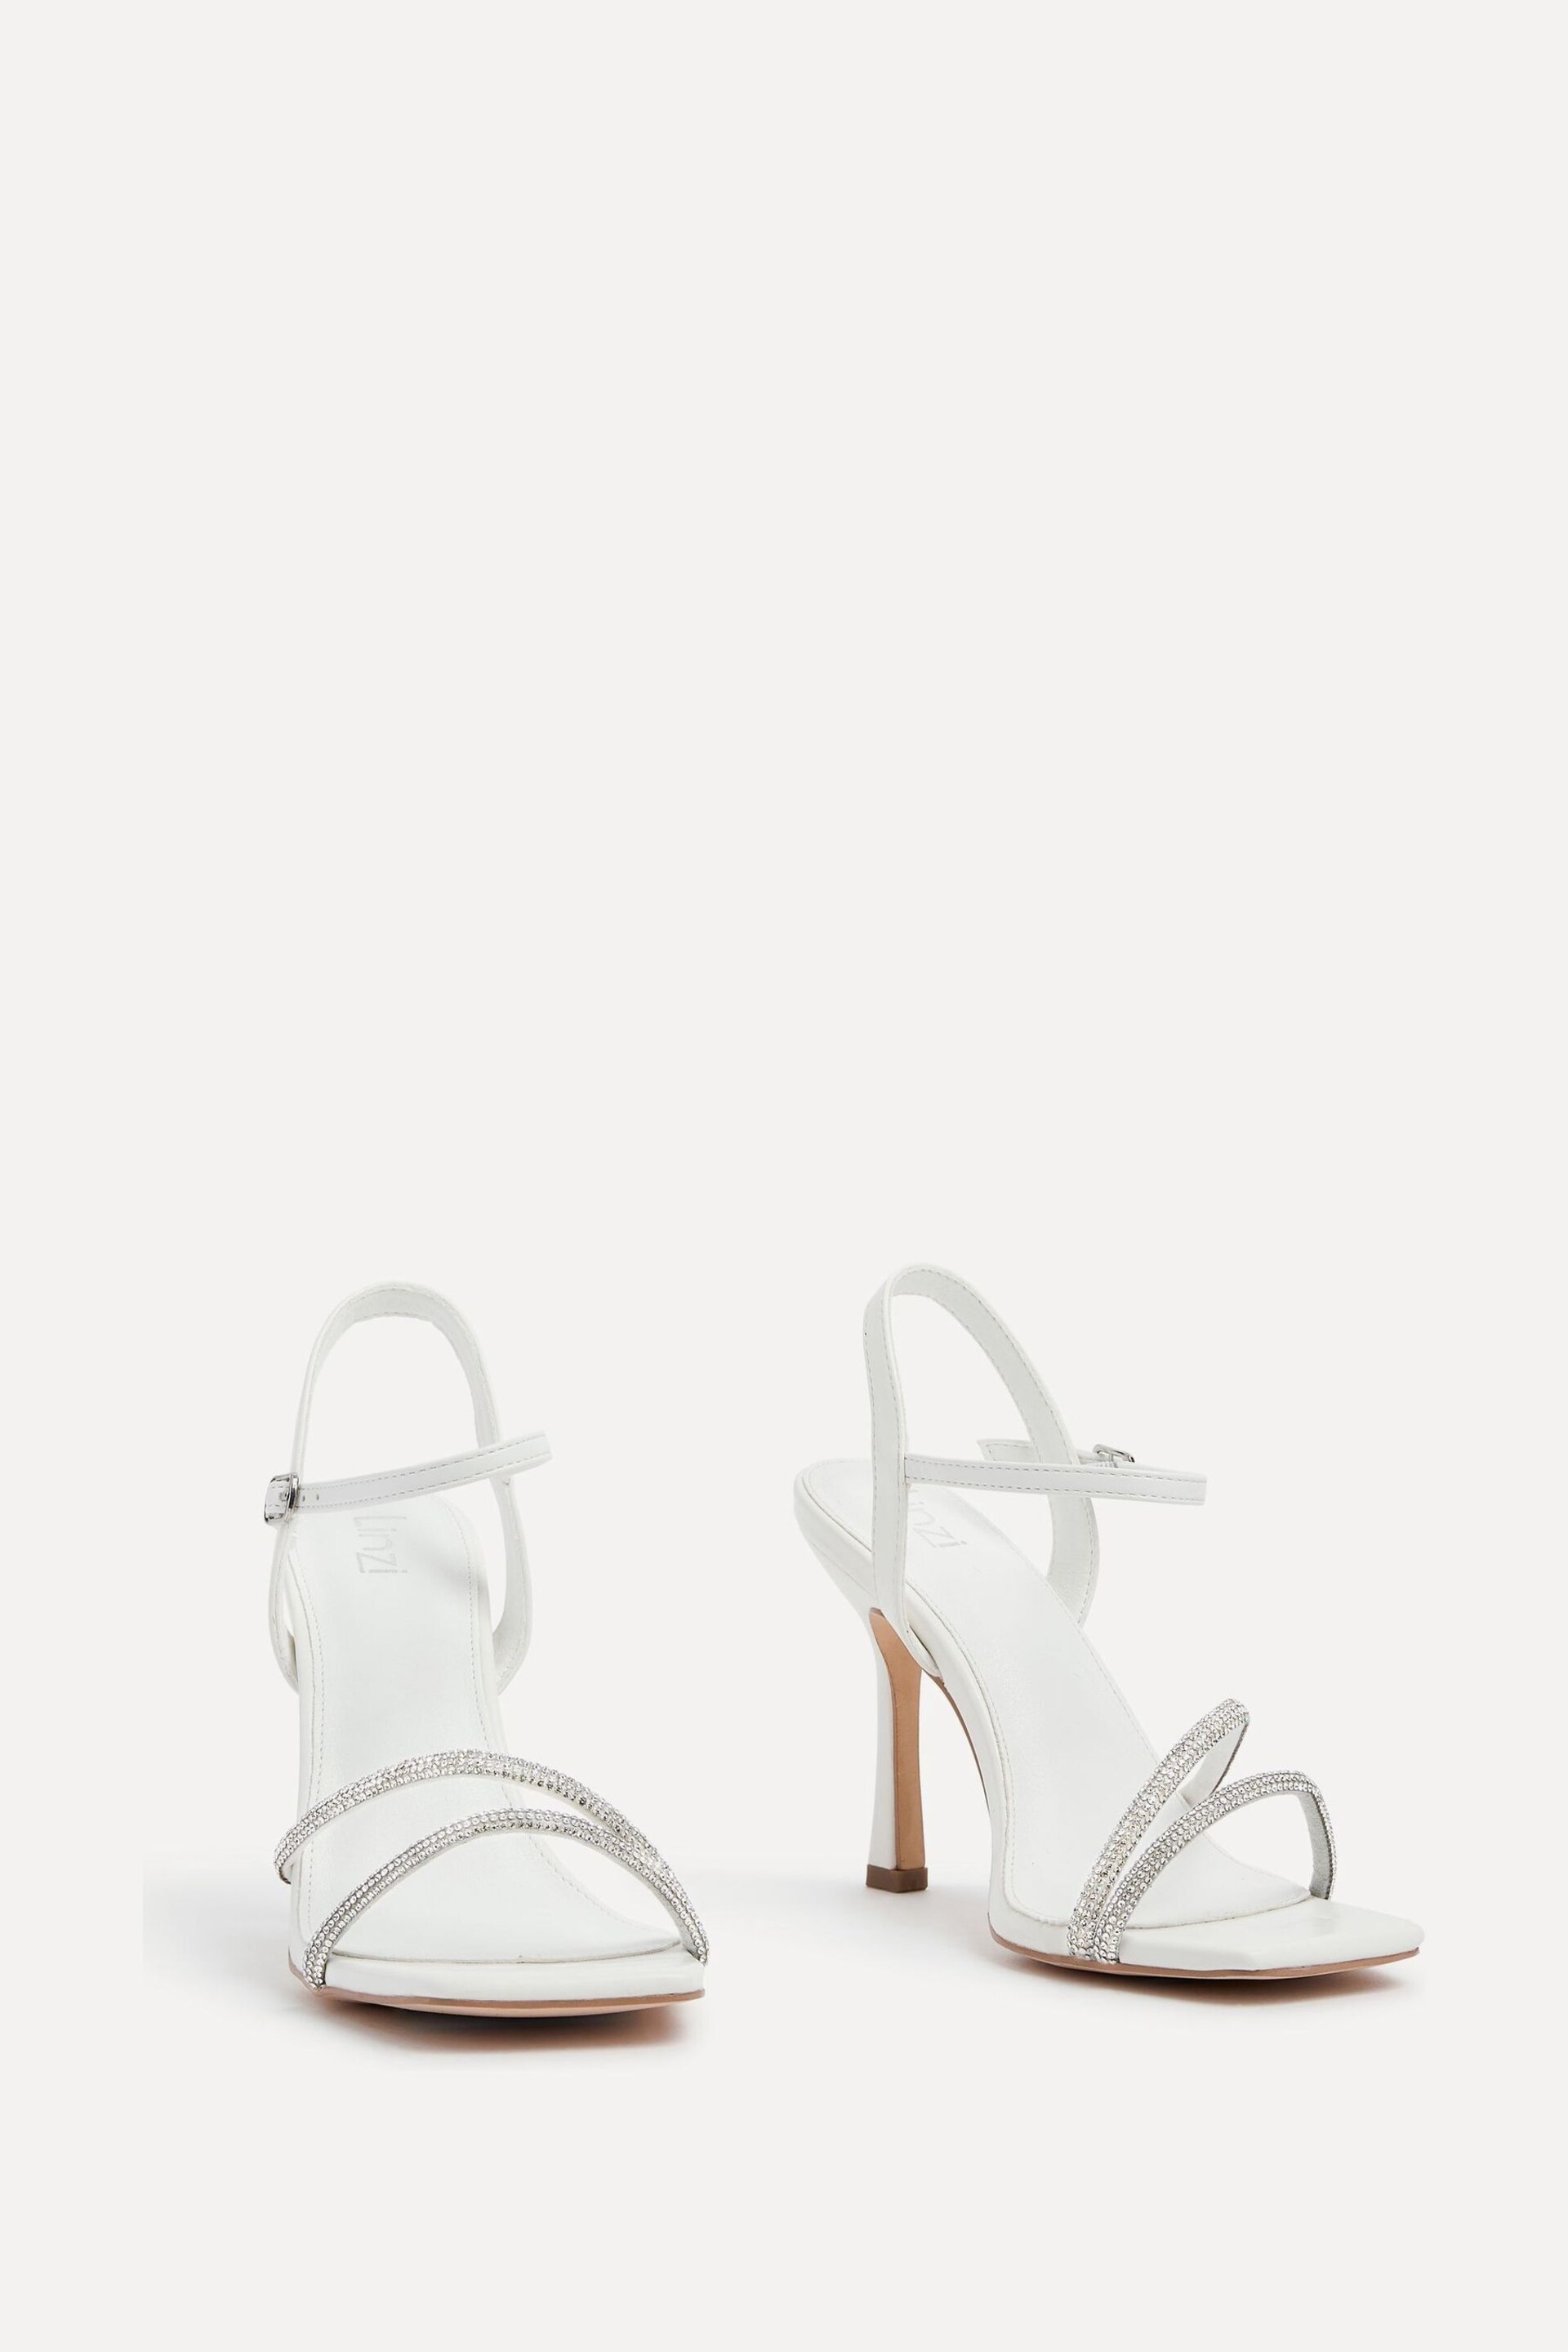 Linzi White Mesmerized Diamanté Embellished Strappy Heels - Image 3 of 5